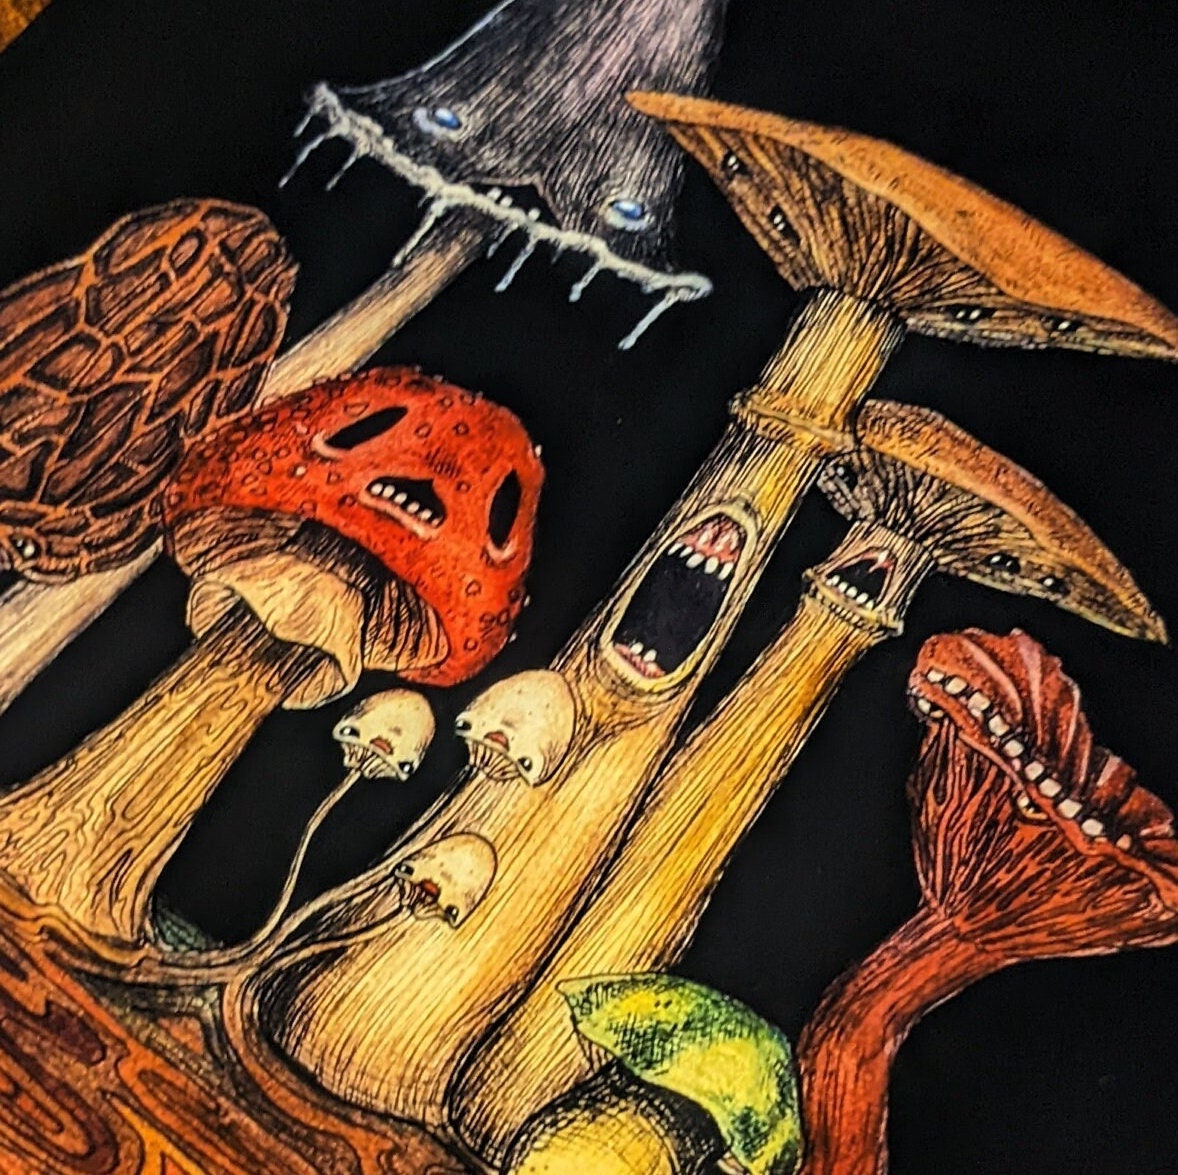 The Miserable Mushrooms Spooky Mushrooms Creepy Cottagecore pic